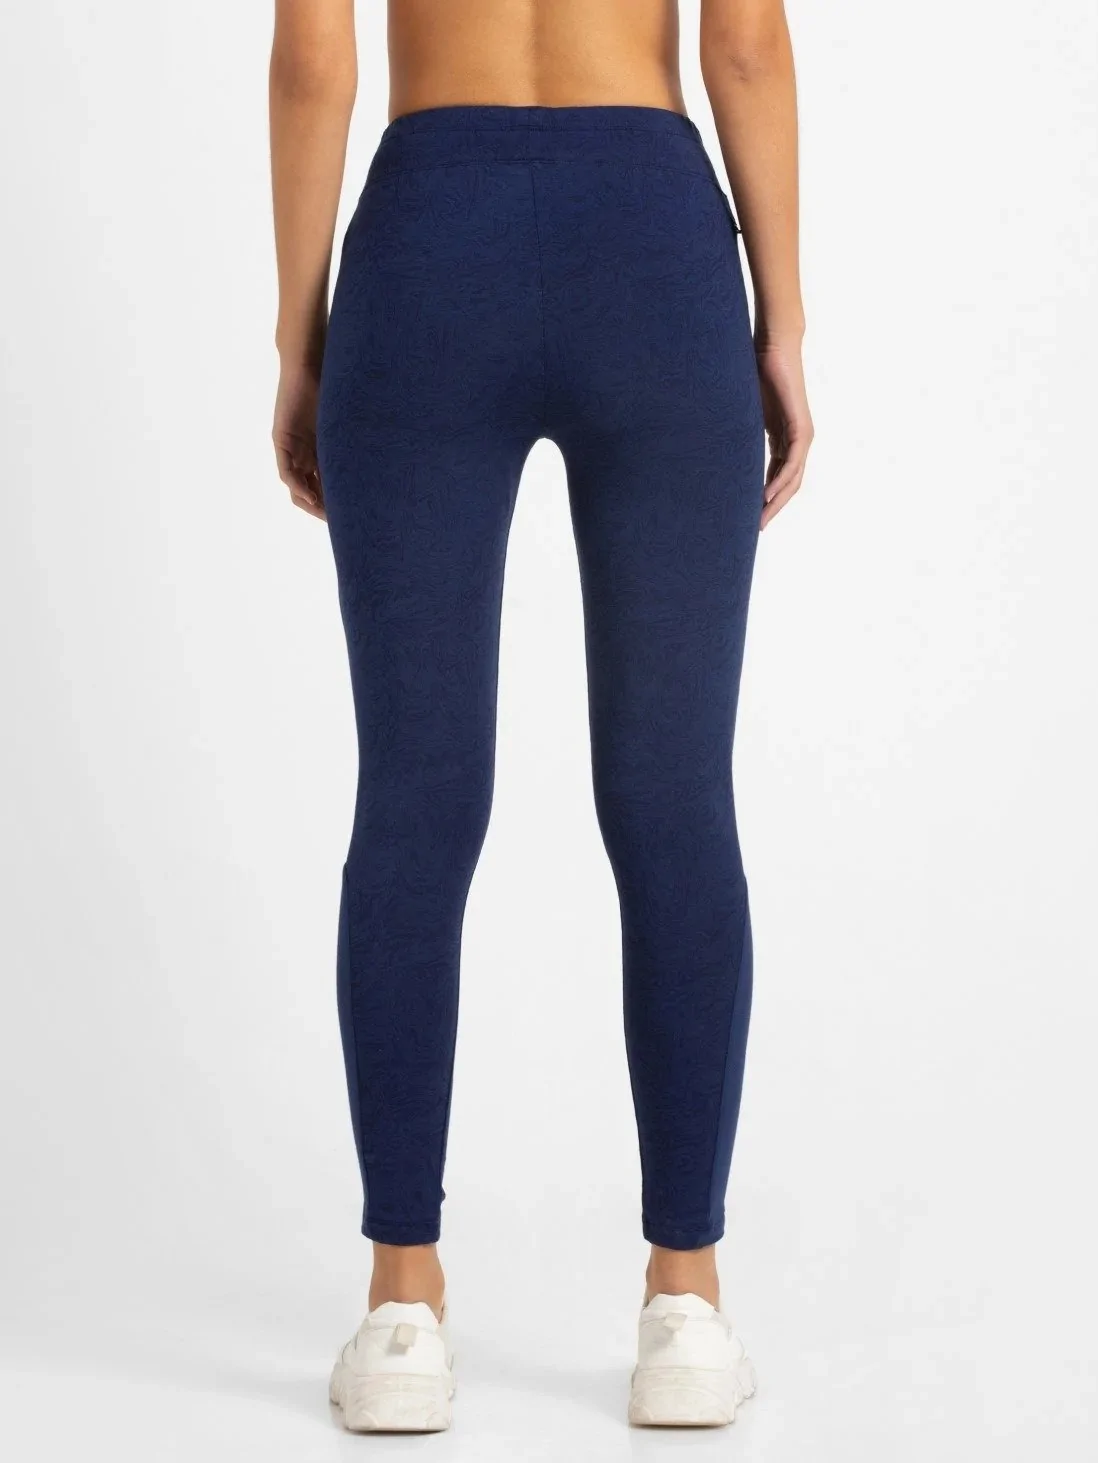 Buy Champ Women's Regular Fit Yoga Pants ( V5MLL4010 _ Royal Blue _ Medium  ) at Amazon.in